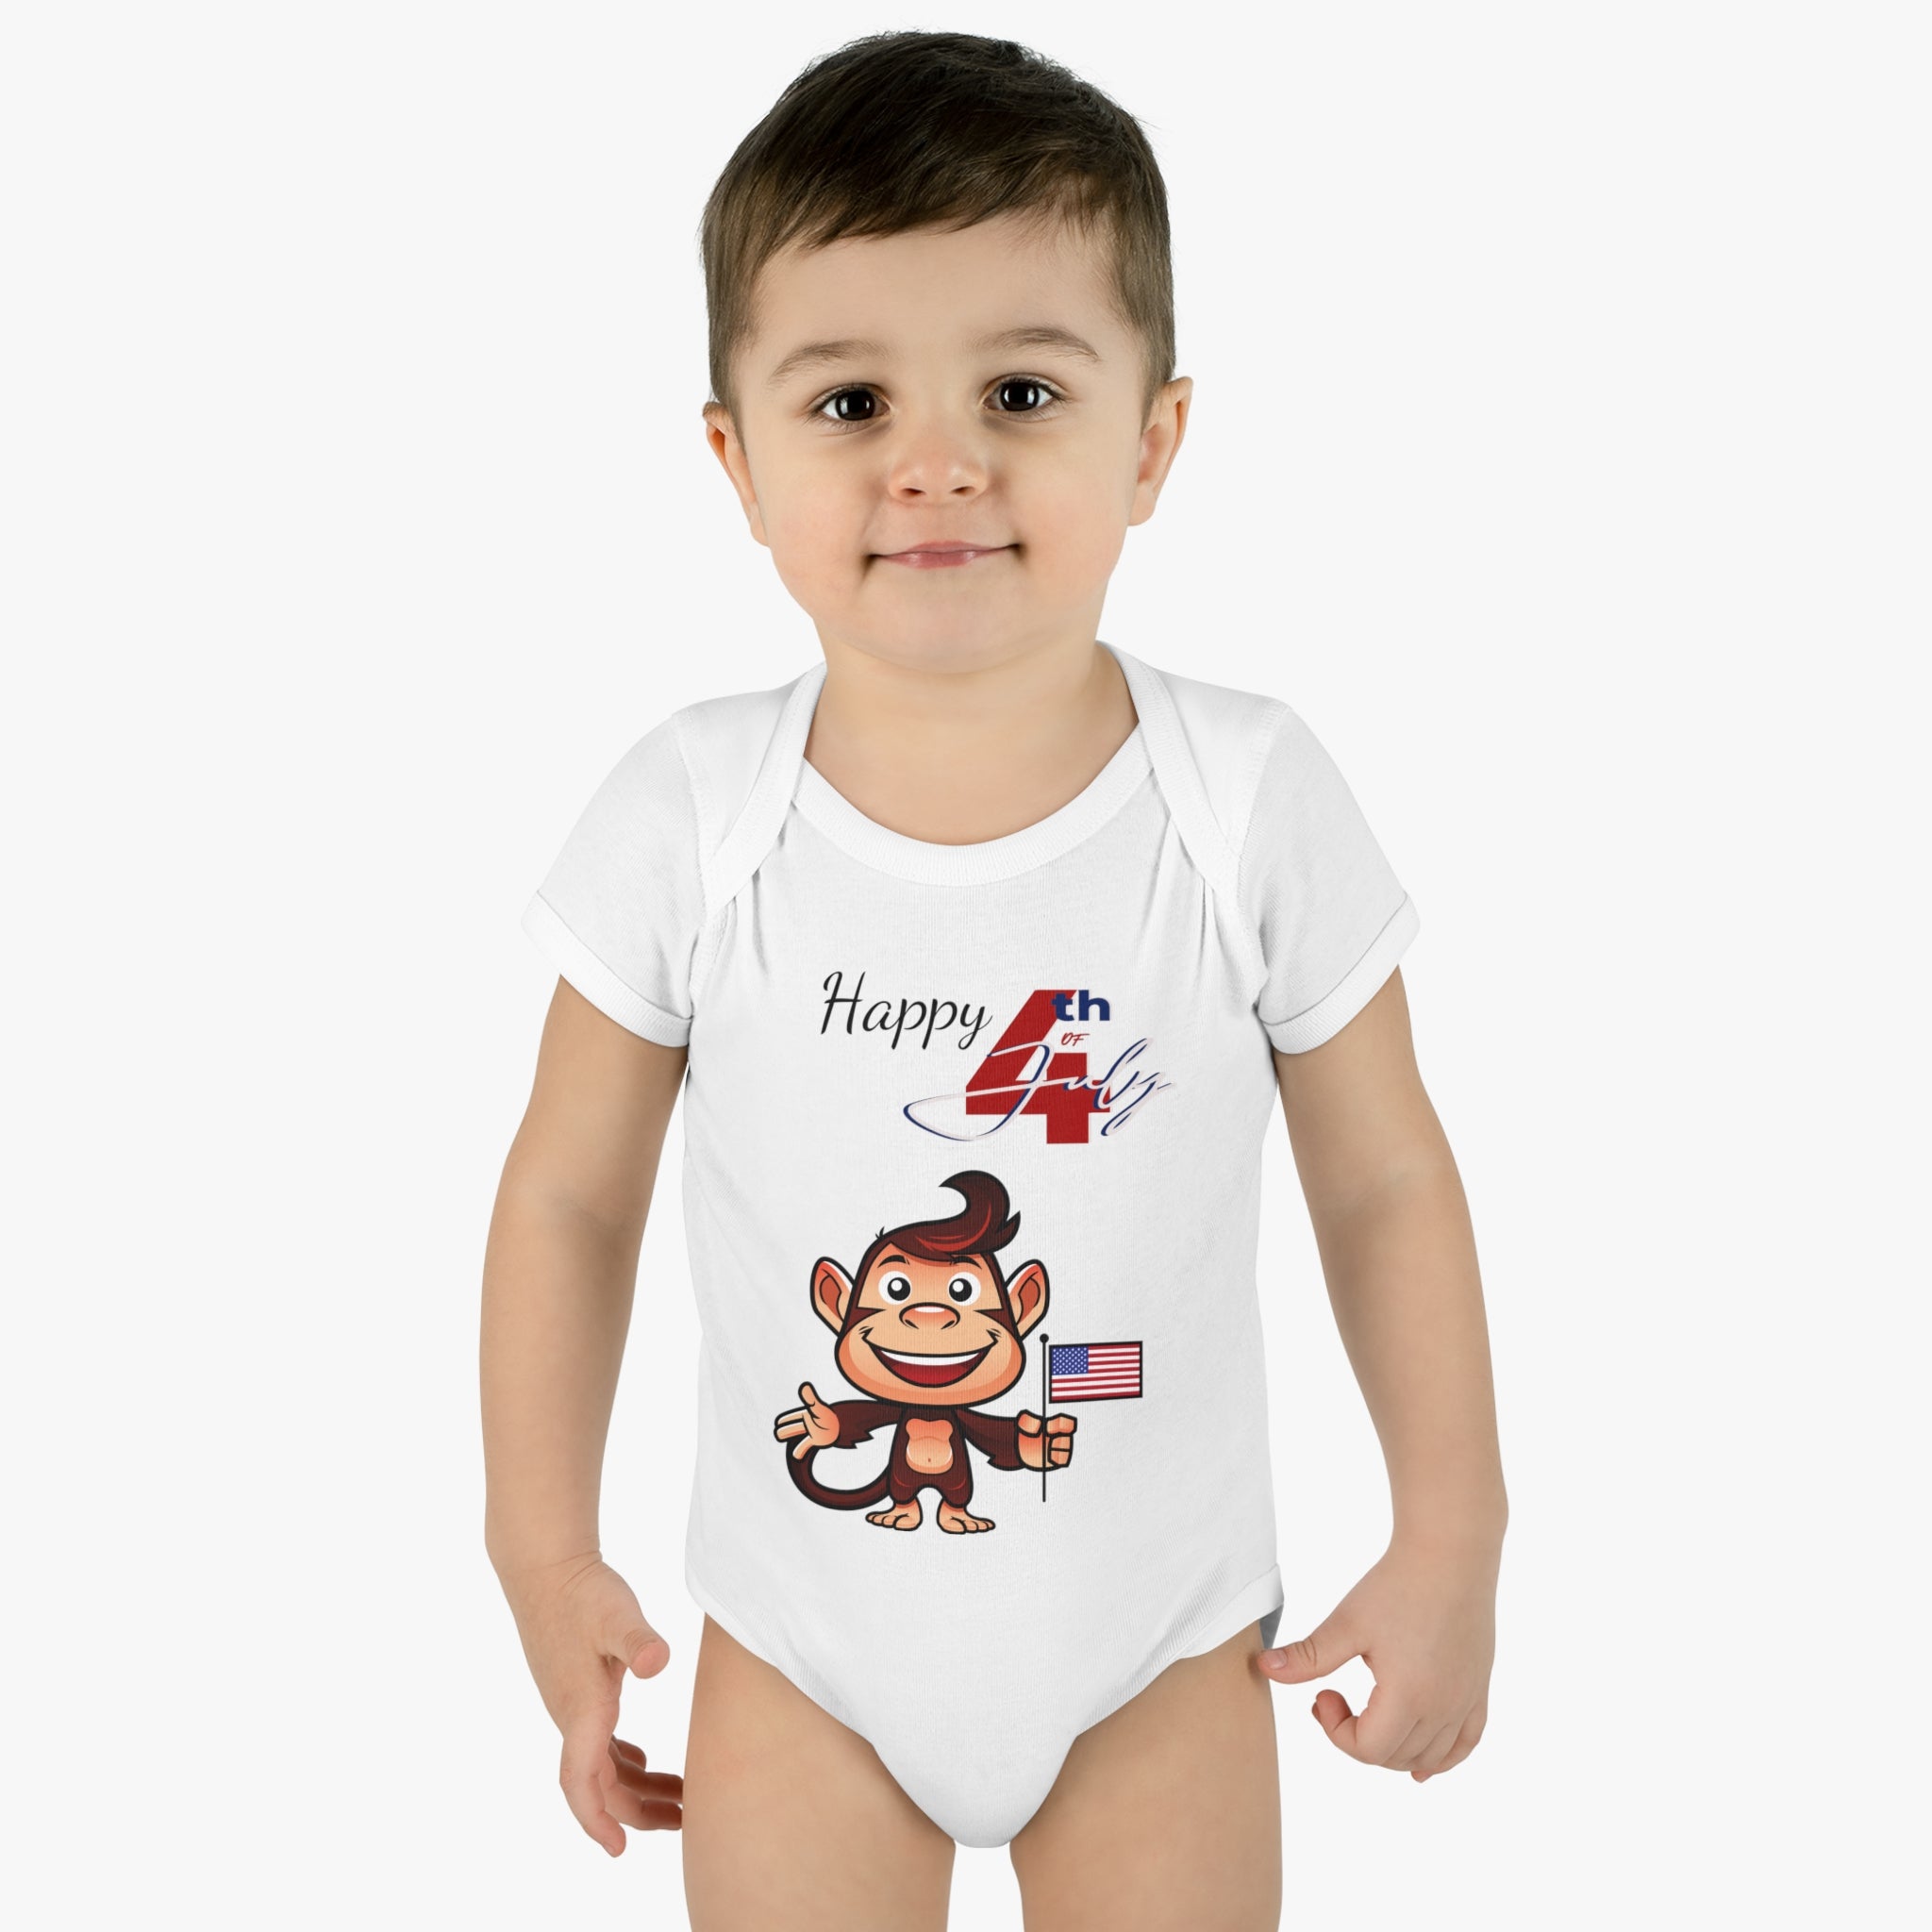 Happy 4th of July Cute Monkey design Baby Bodysuit